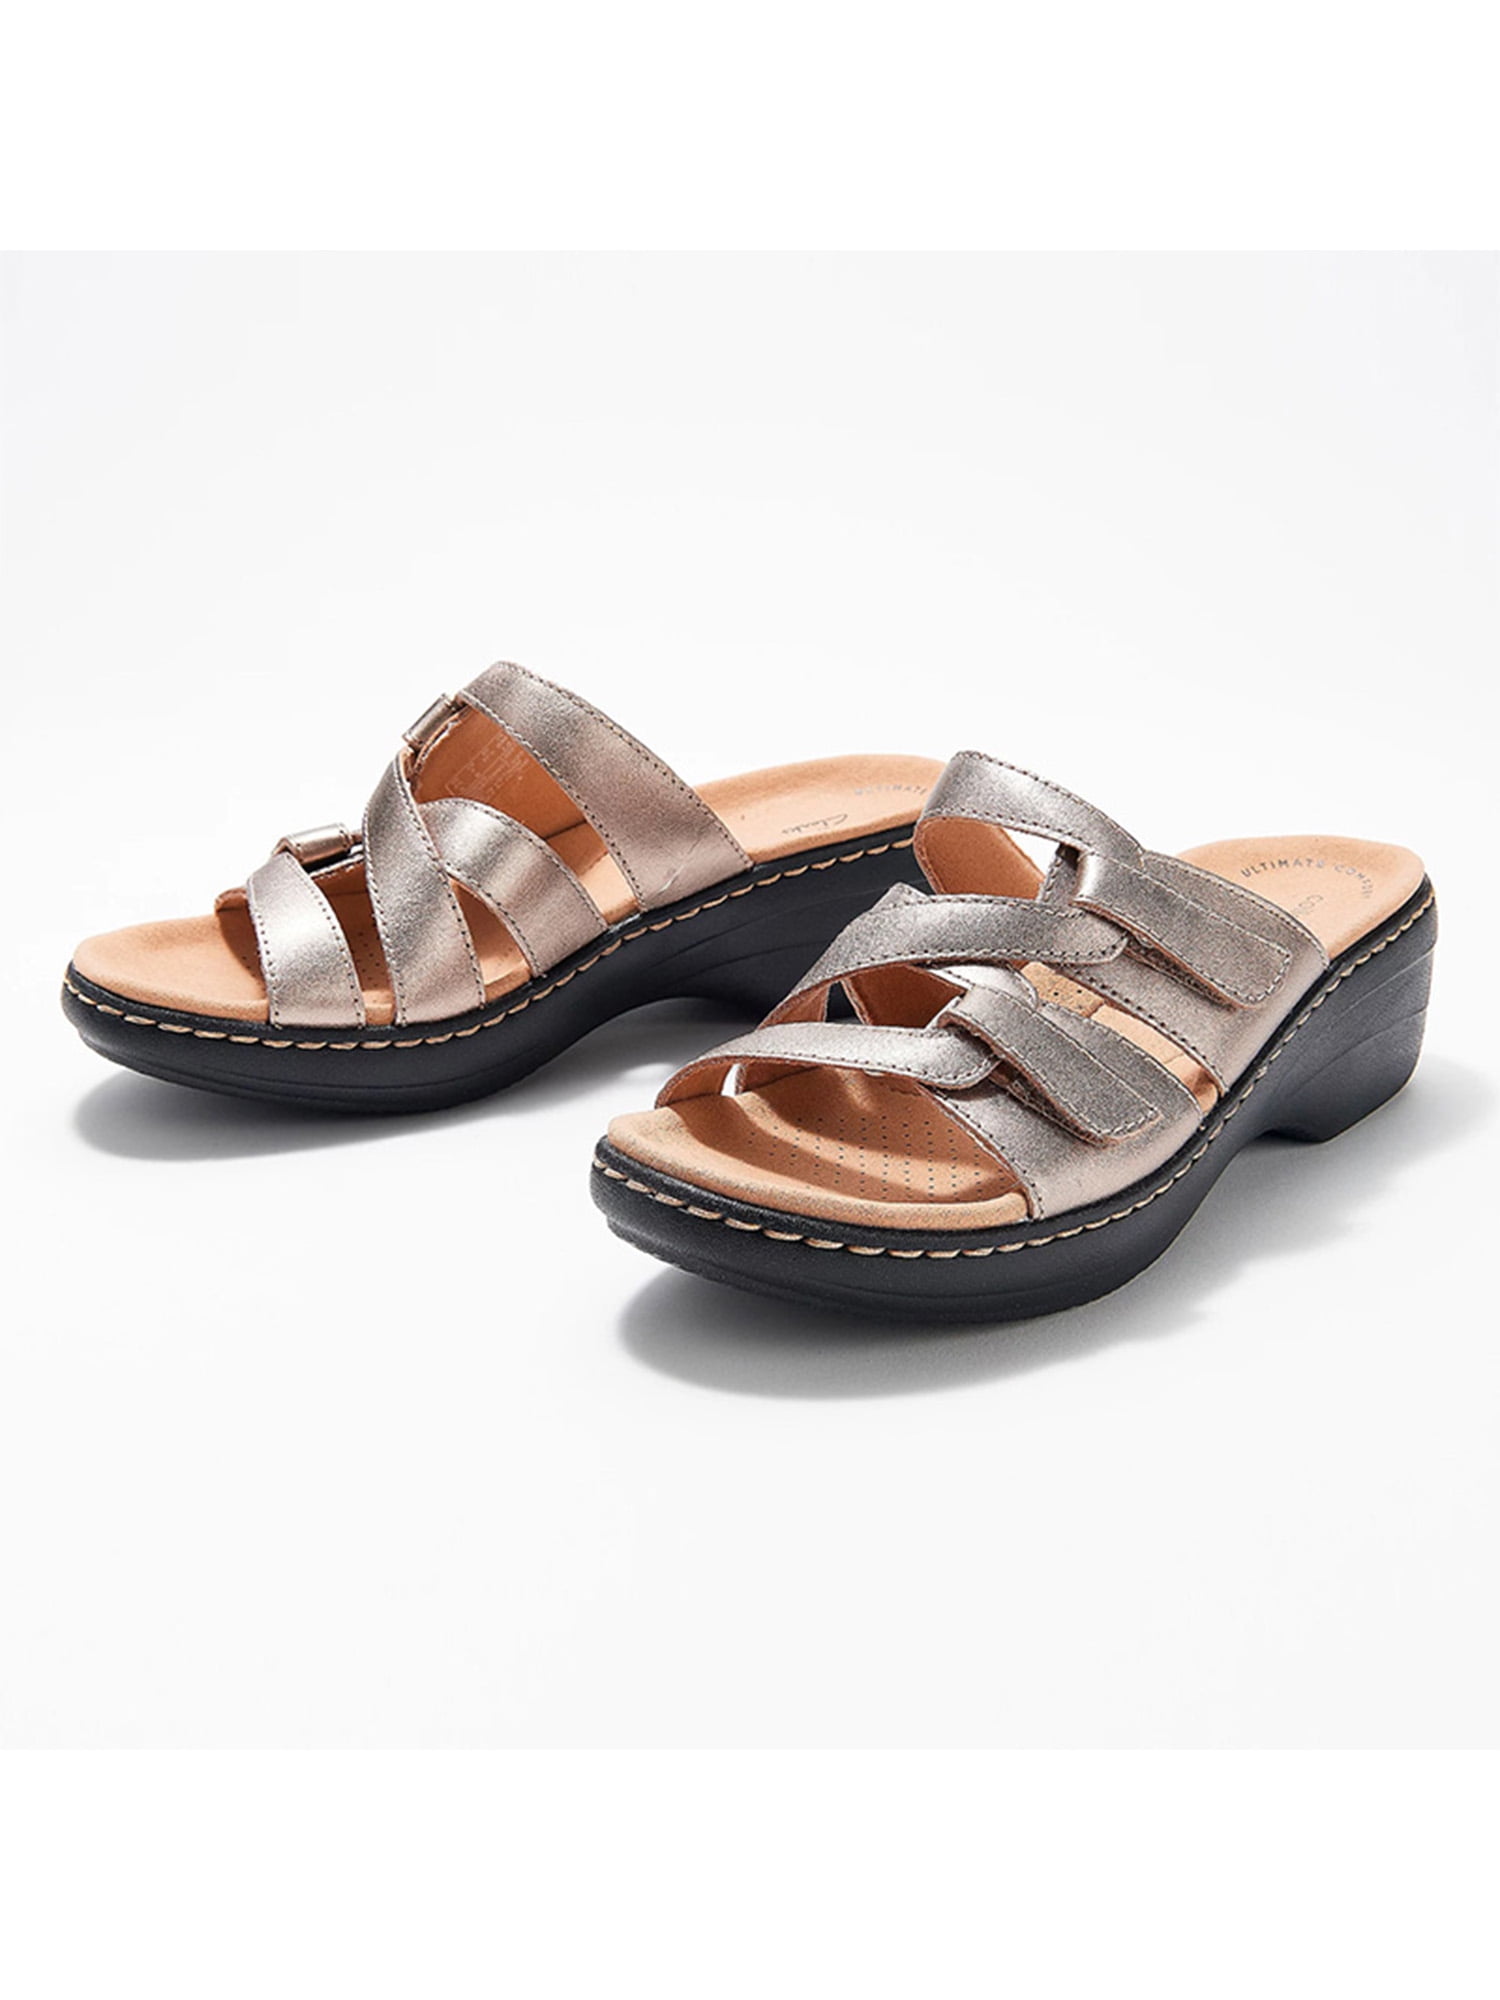 New Women Comfort Wedge Sandals Dual Adjustable Strap Slipper 3 Colors Size 5-10 